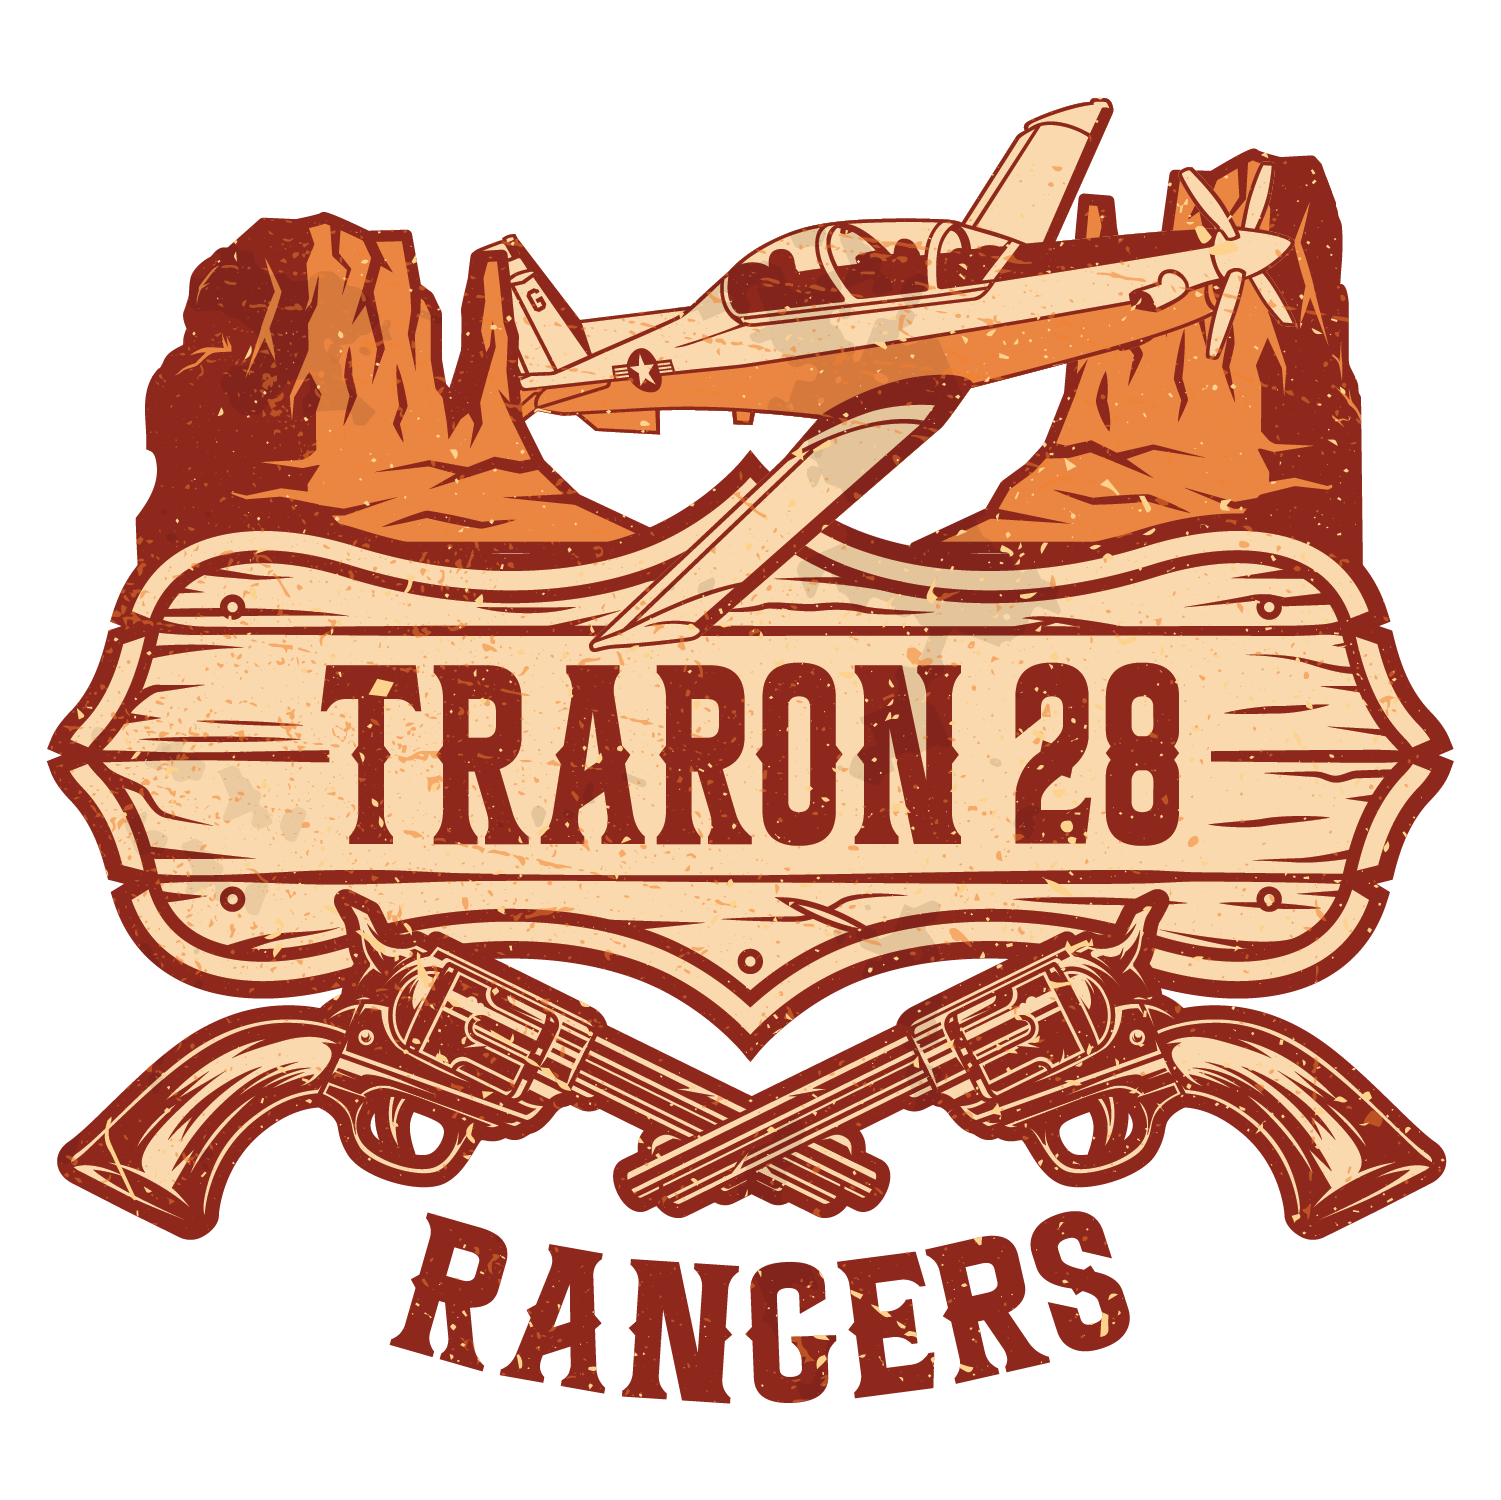 VT-28 "Rangers"